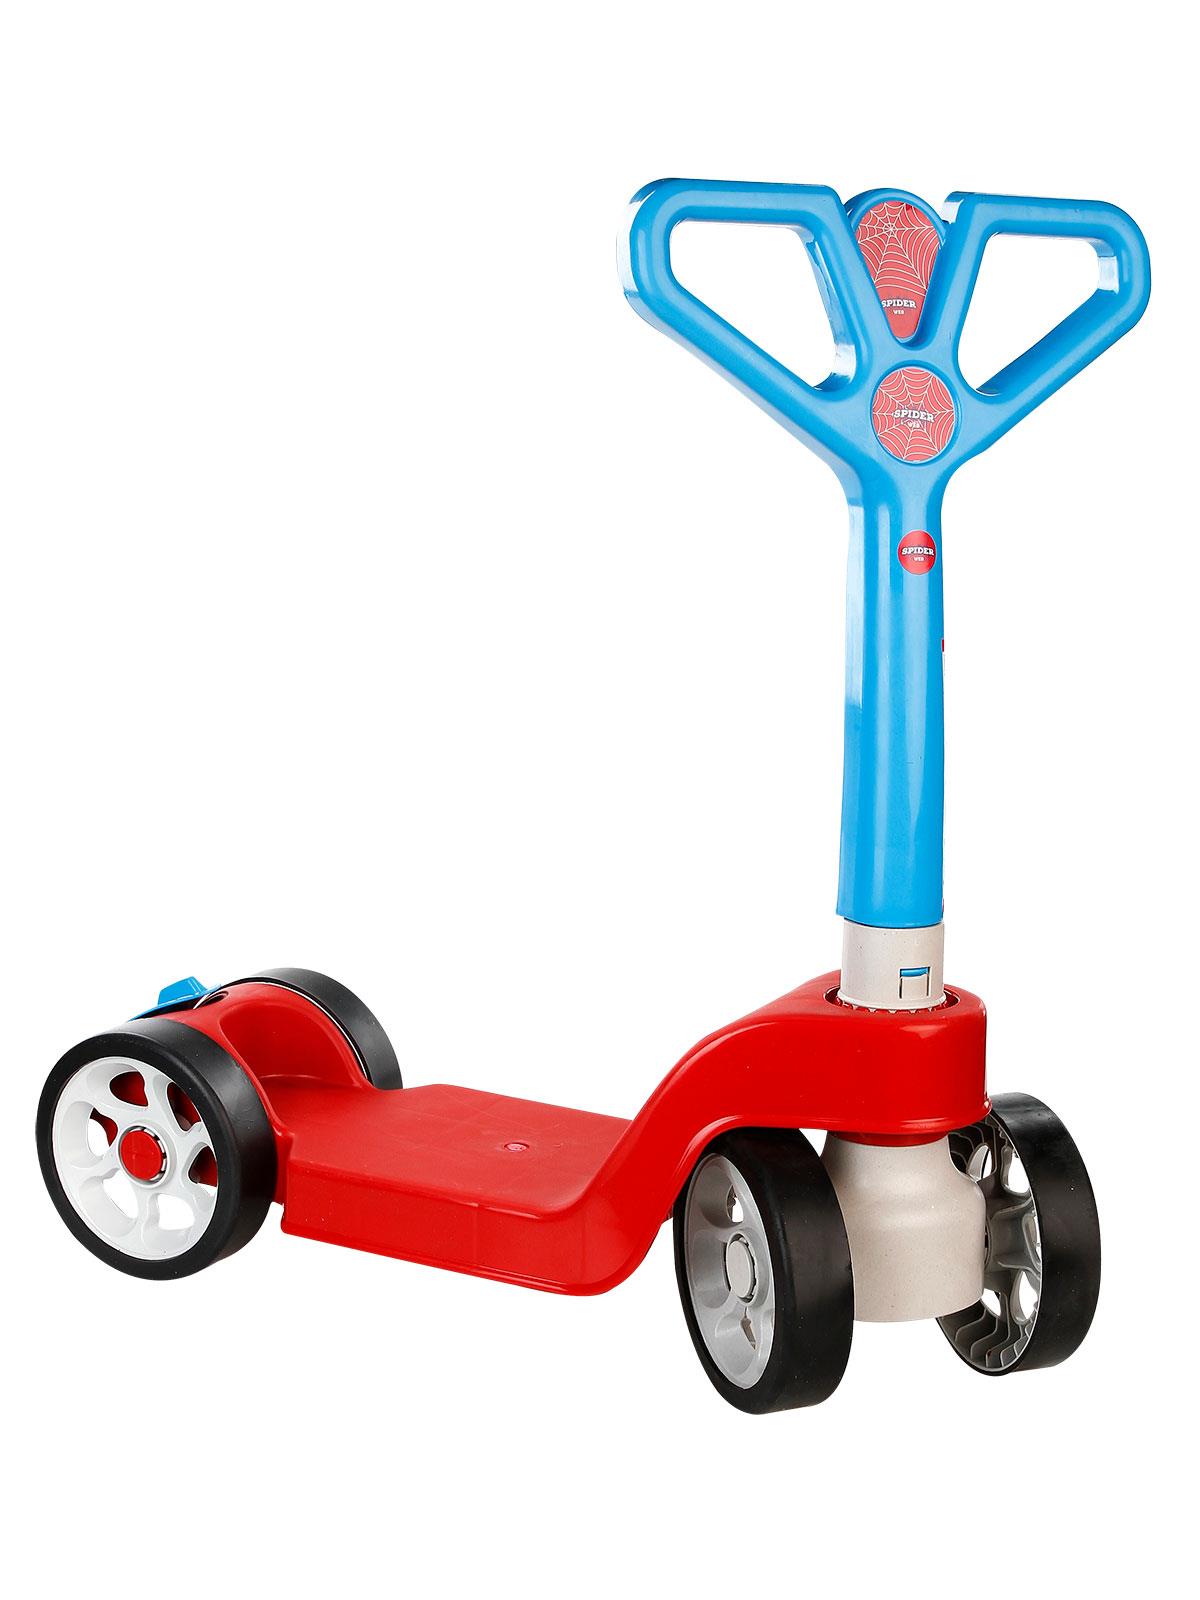 Civil Toys Spider 4 Teker Scooter Kırmızı